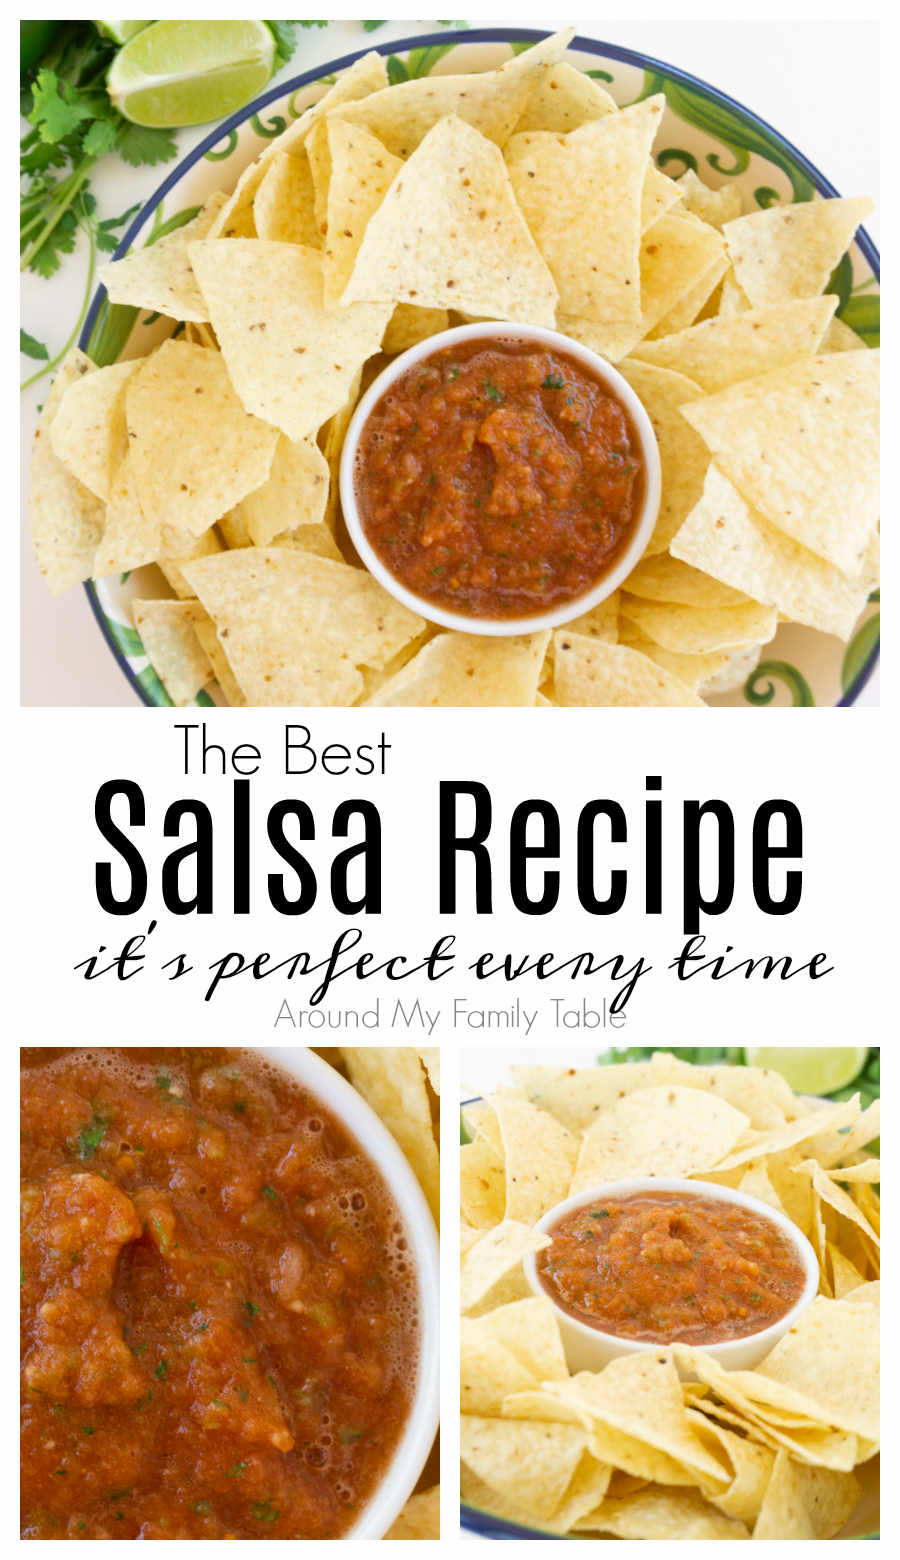 Best Salsa Recipe- perfect every time! via @slingmama